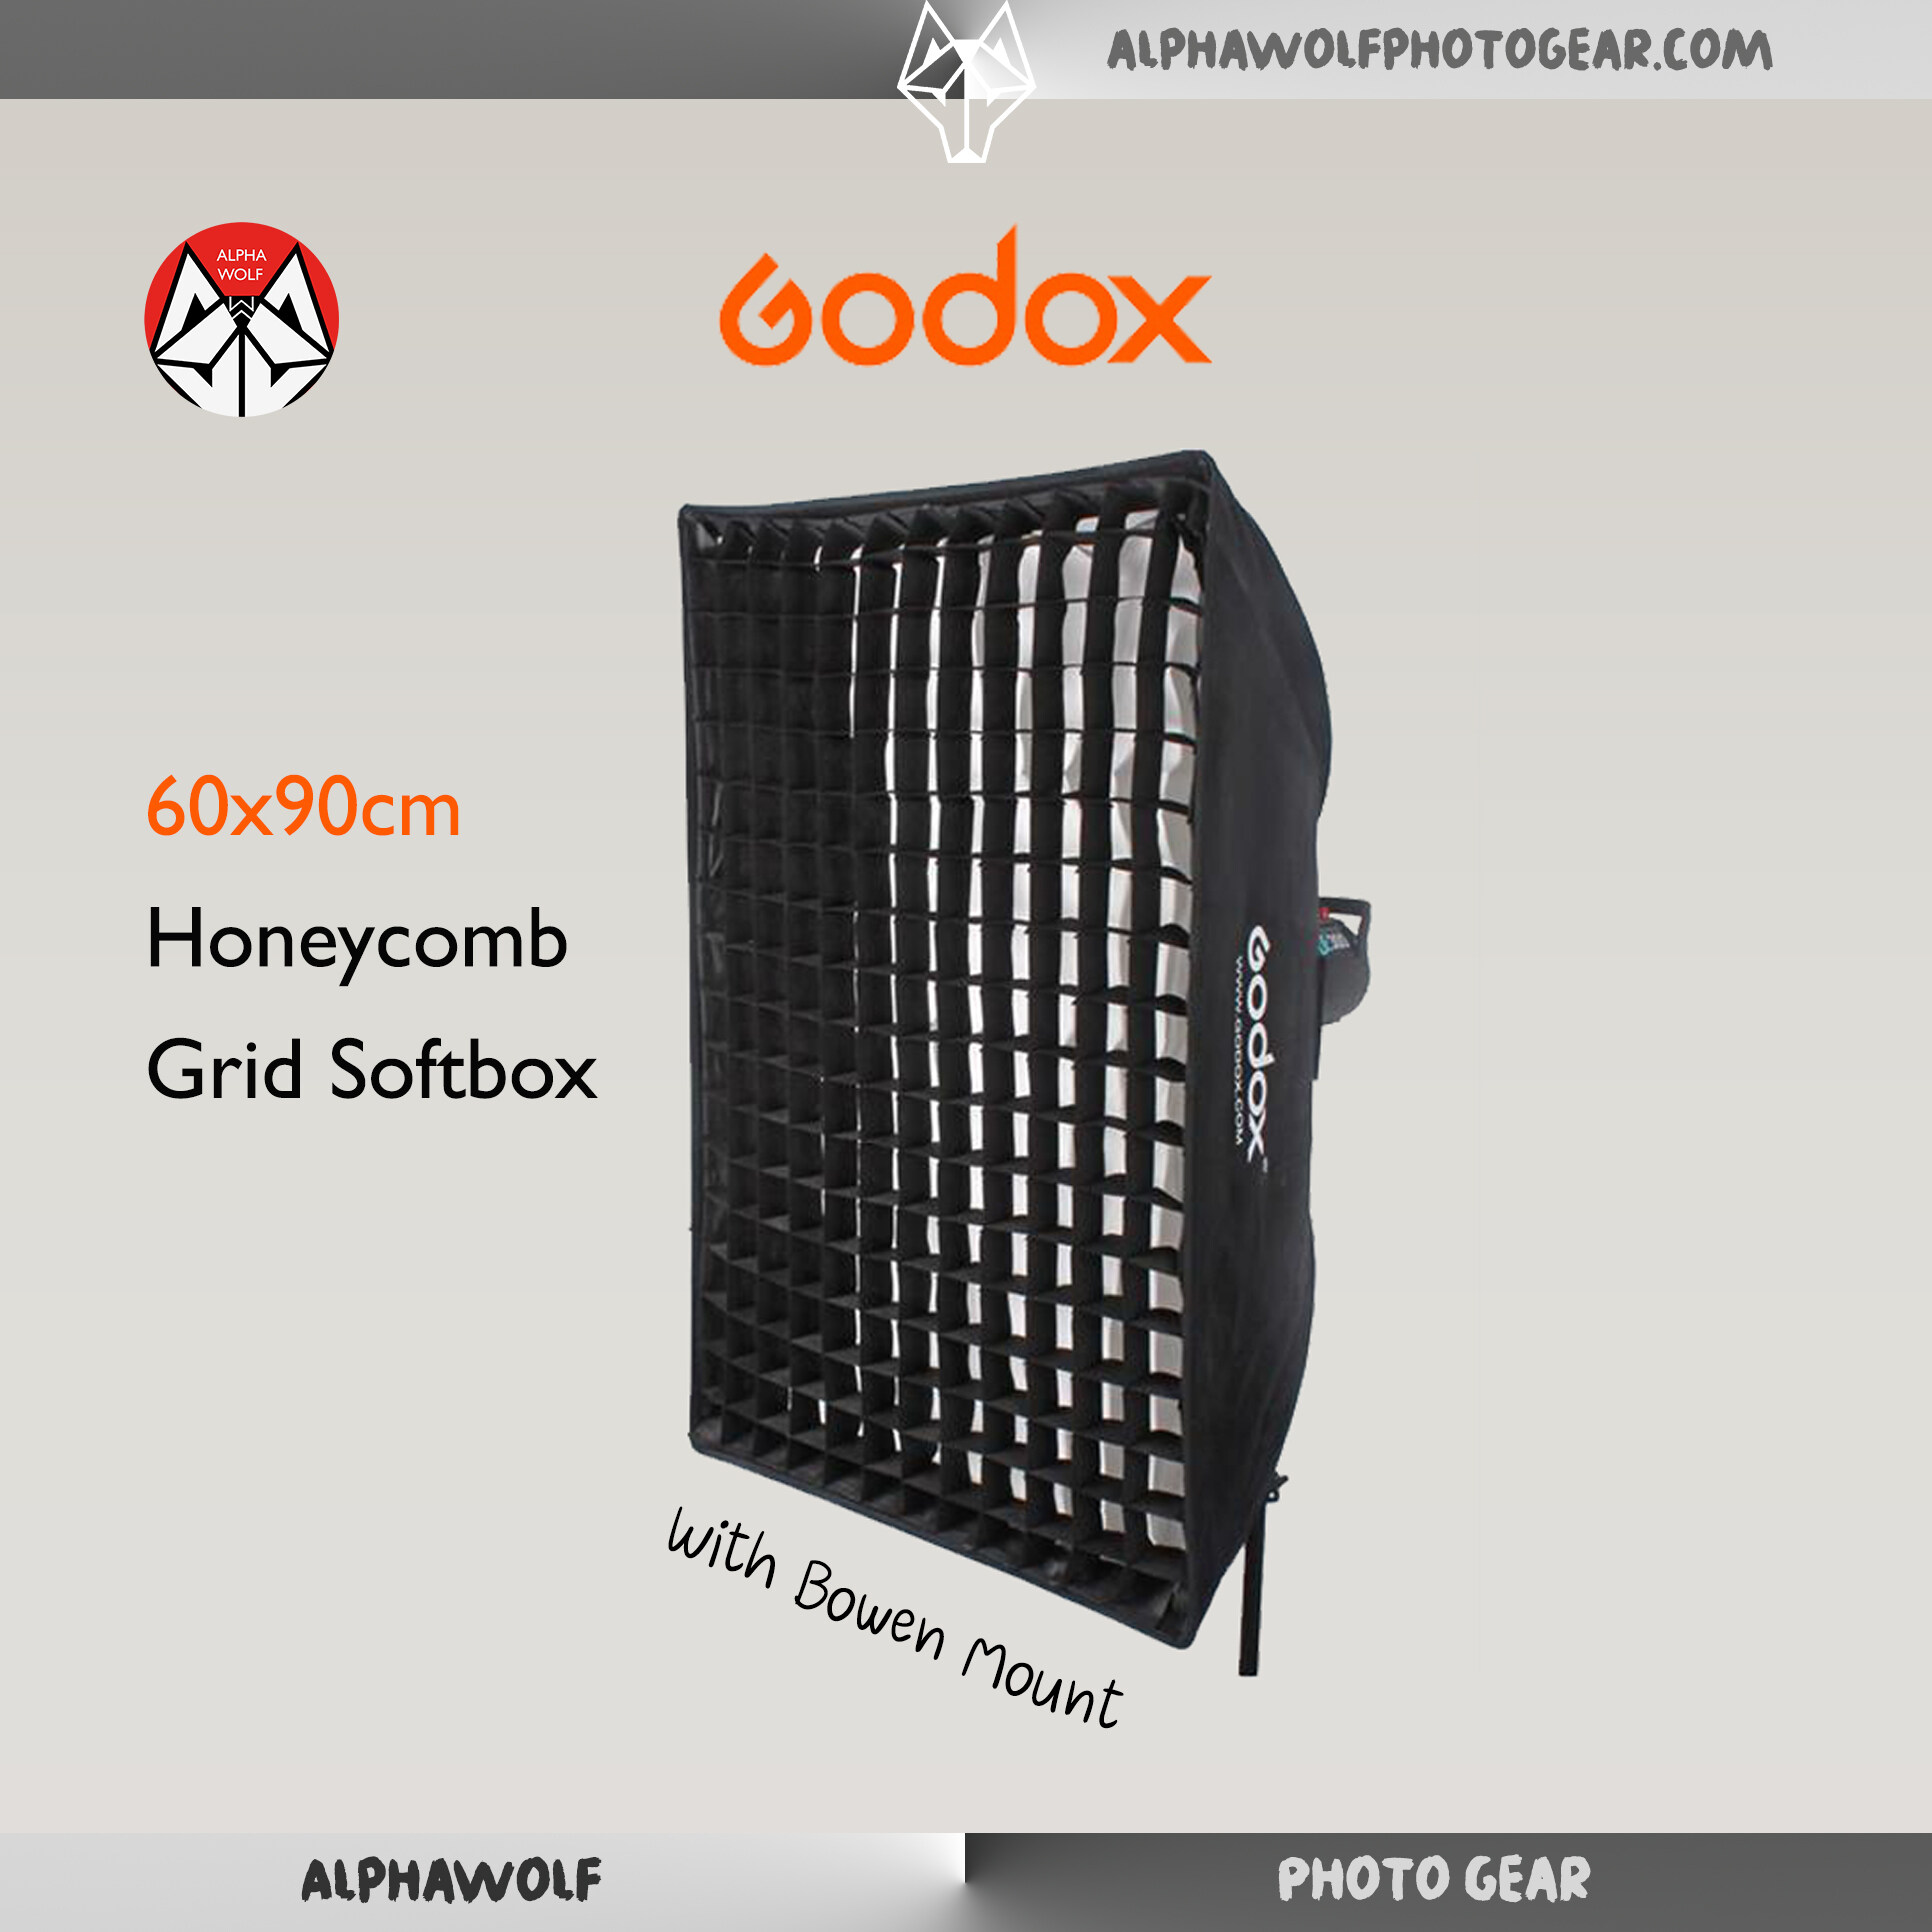 Godox SB-GUSW SB GUSW 60x90cm Rectangular Softbox with Grid ทรงสี่เหลี่ยม พร้อมแผ่นกรอง 2ชั้น และกริดรังผึ้ง ขนาด60*90cm แบบBowens Mount  ALPHAWOLF